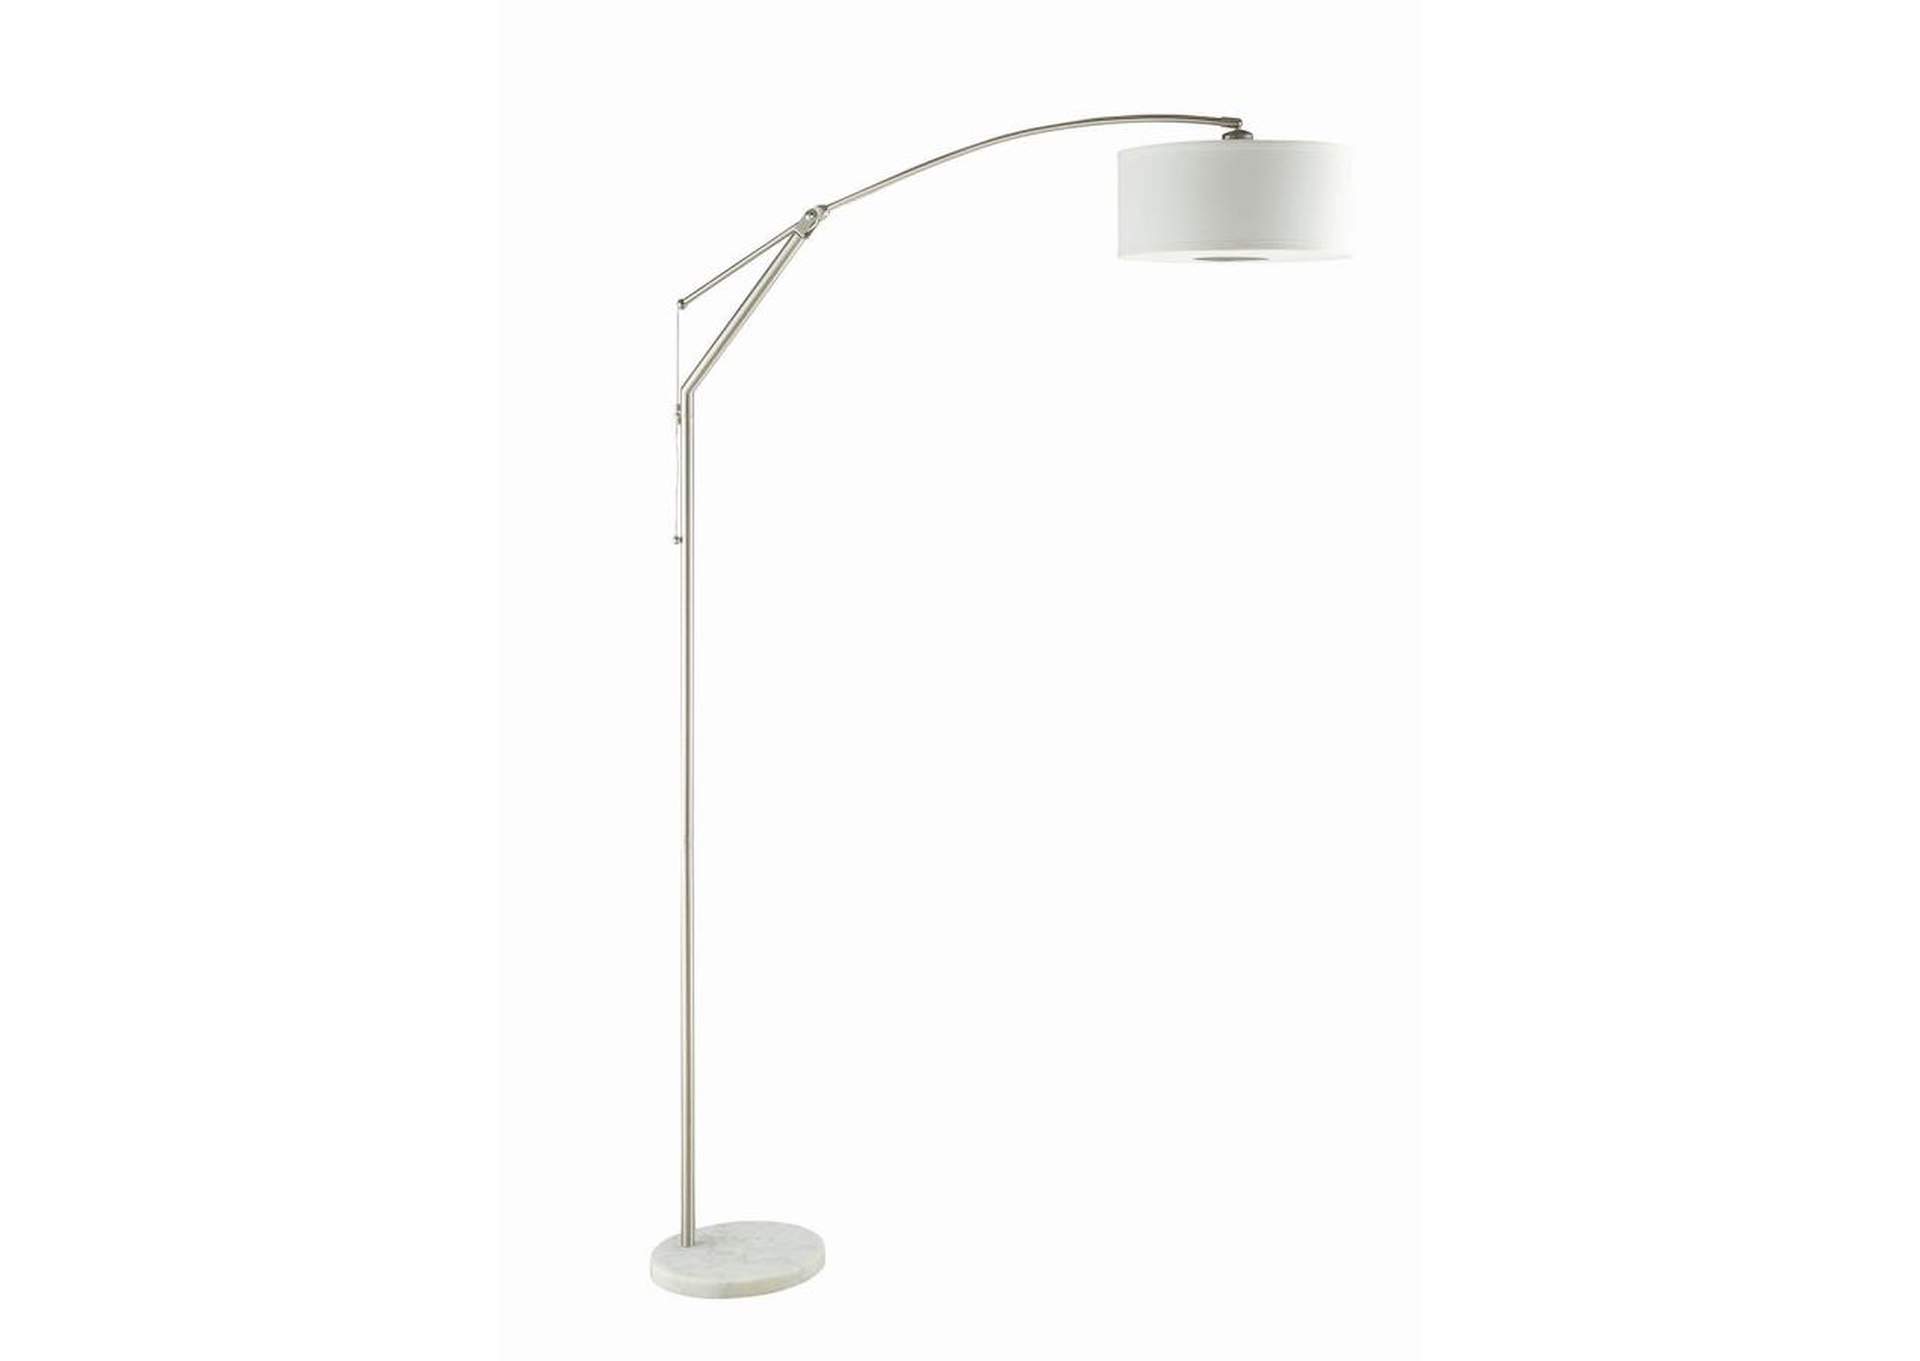 Moniz Adjustable Arched Arm Floor Lamp Chrome And White,Coaster Furniture